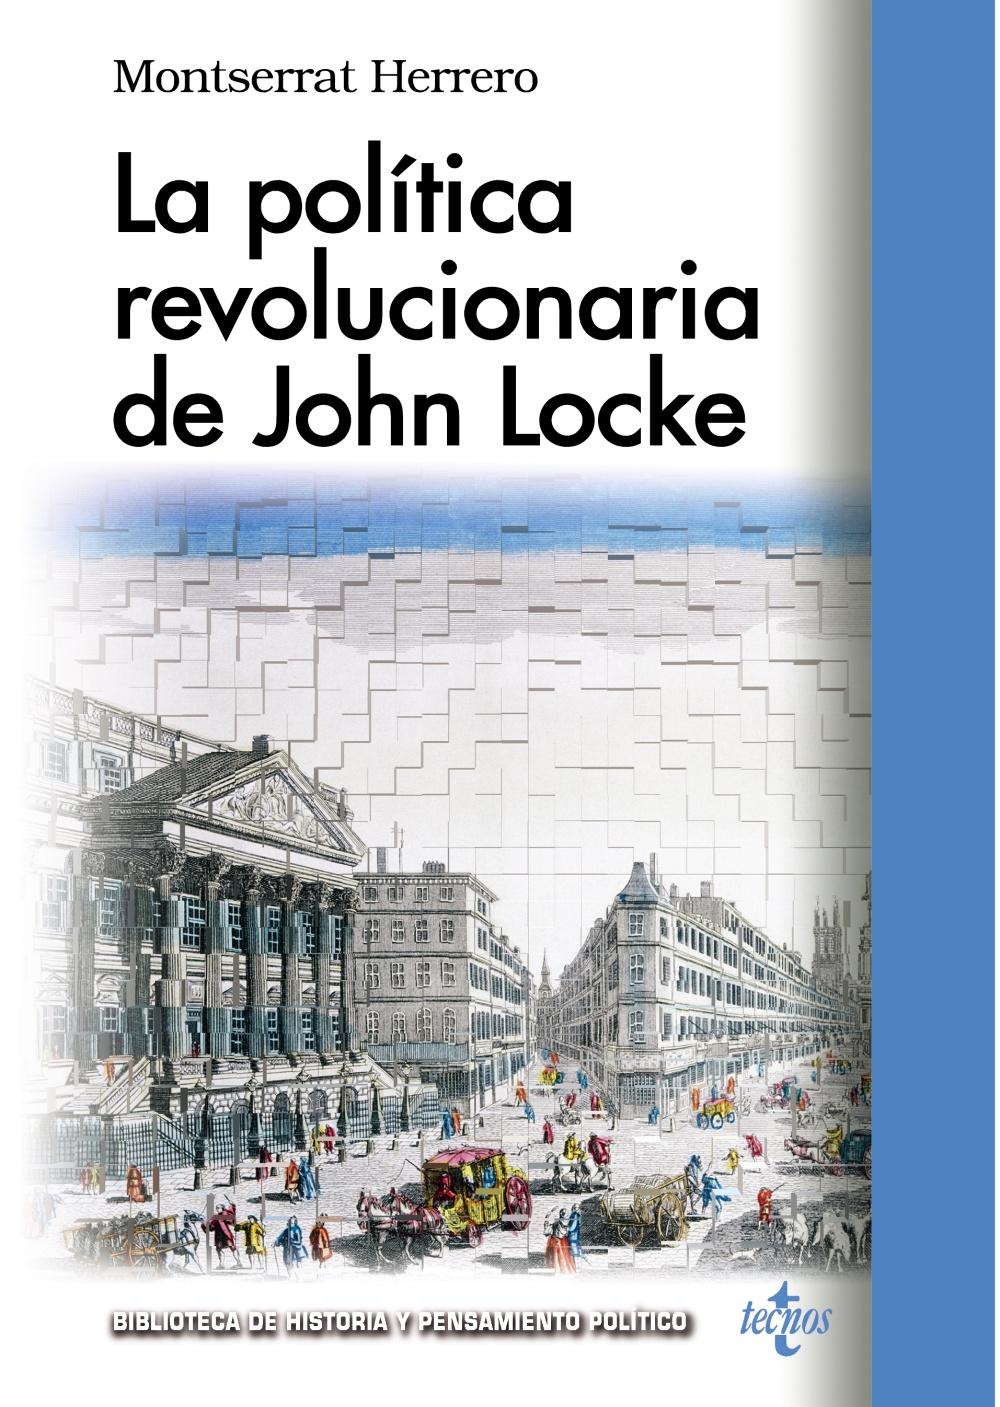 La política revolucionaria de John Locke